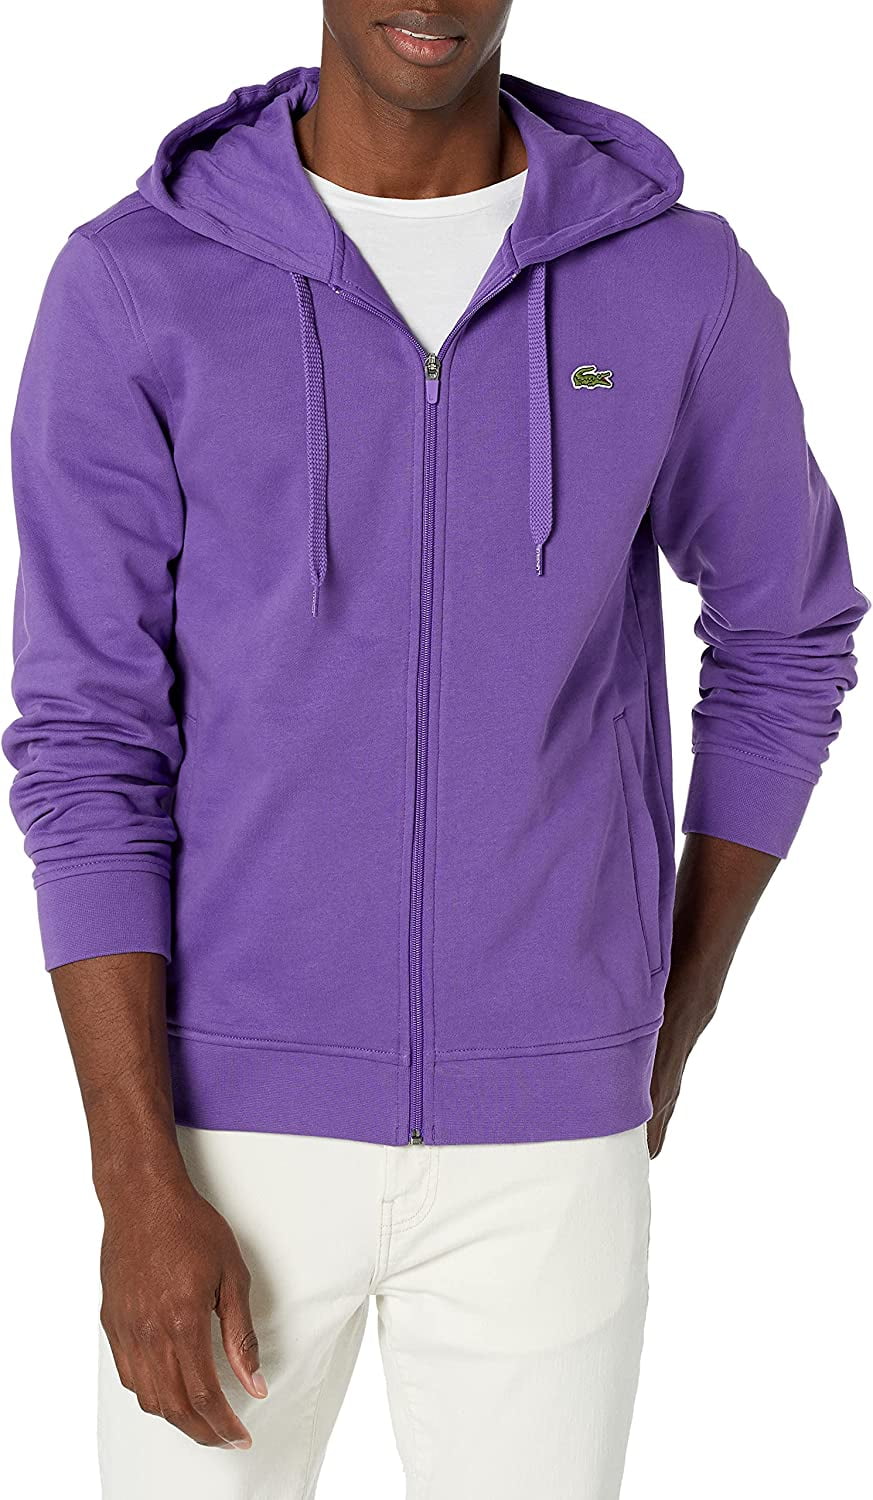 Lacoste Mens Sport Full Zip Light Weight Hooded Tennis Jacket Jacket 